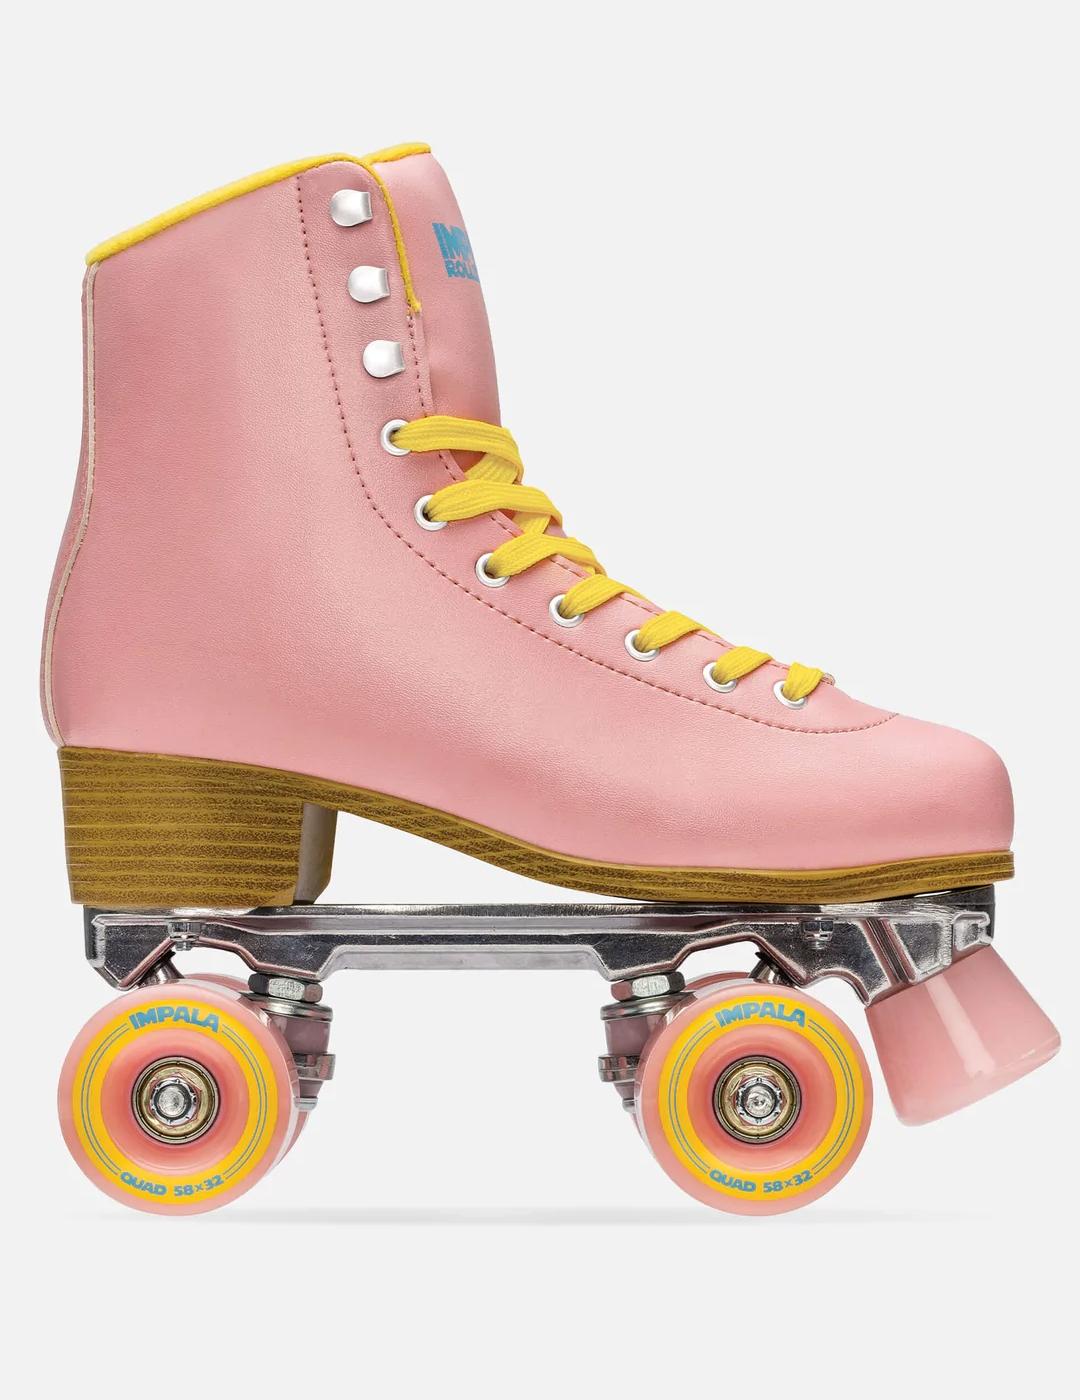 Patines Impala Rollerskates Quad Skate